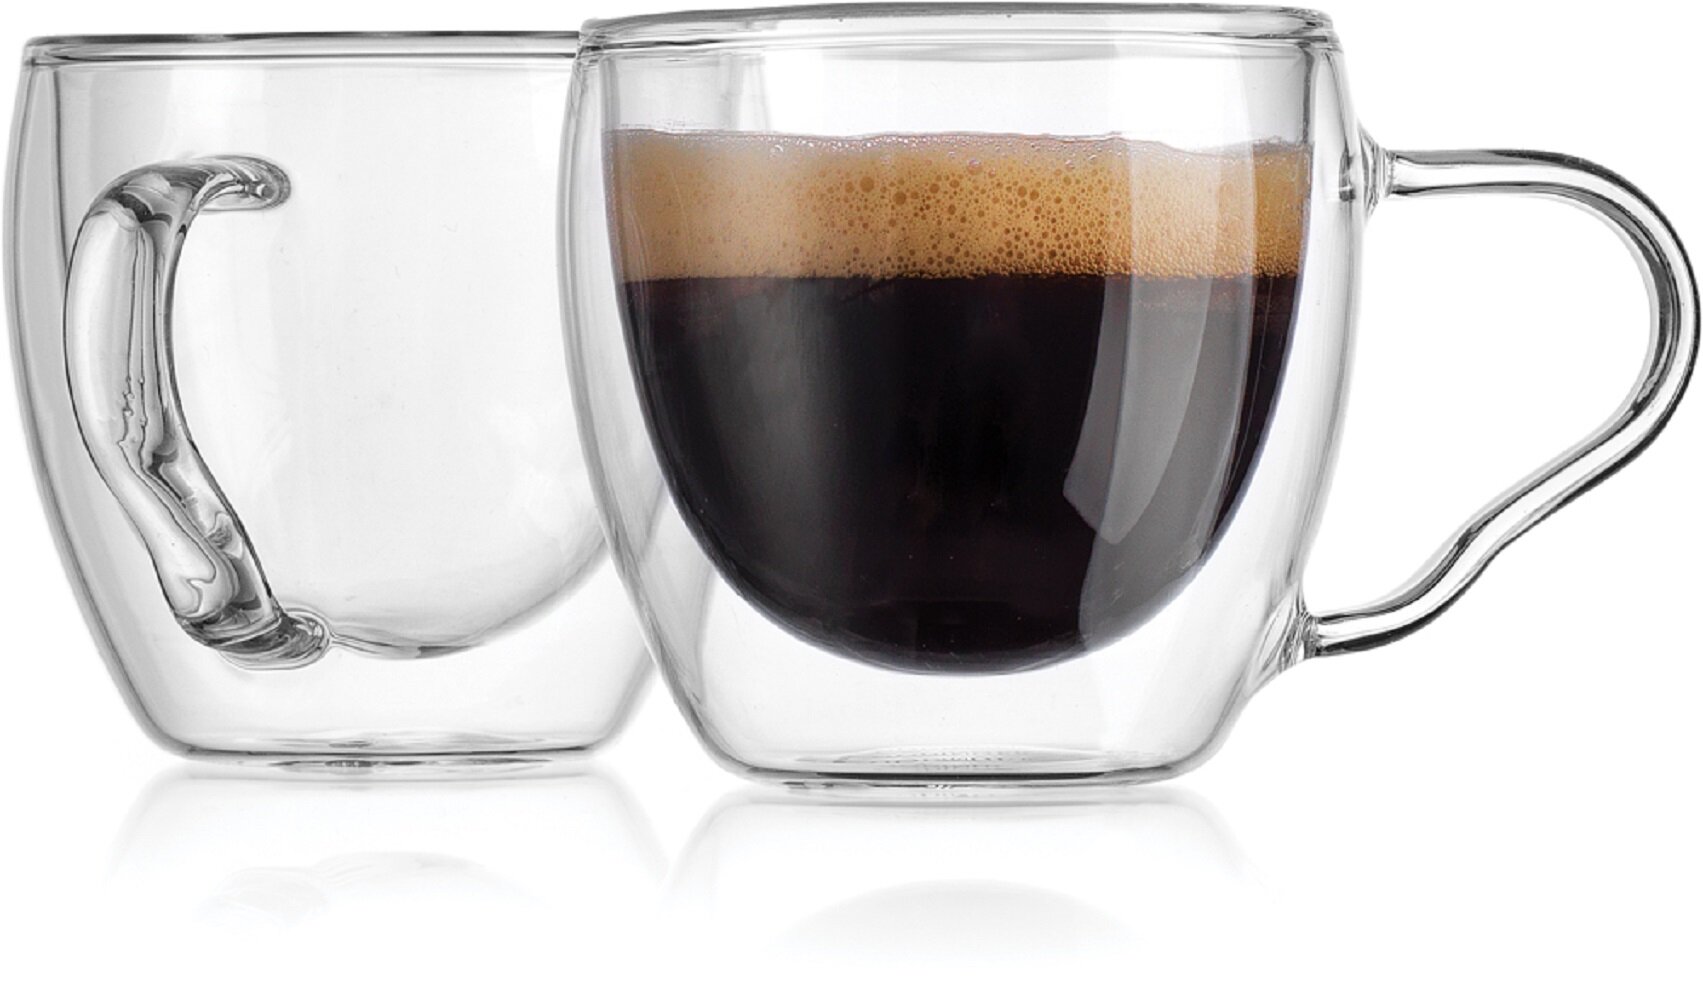  Godinger Espresso Cups, Coffee Mug Set, Glass Coffee